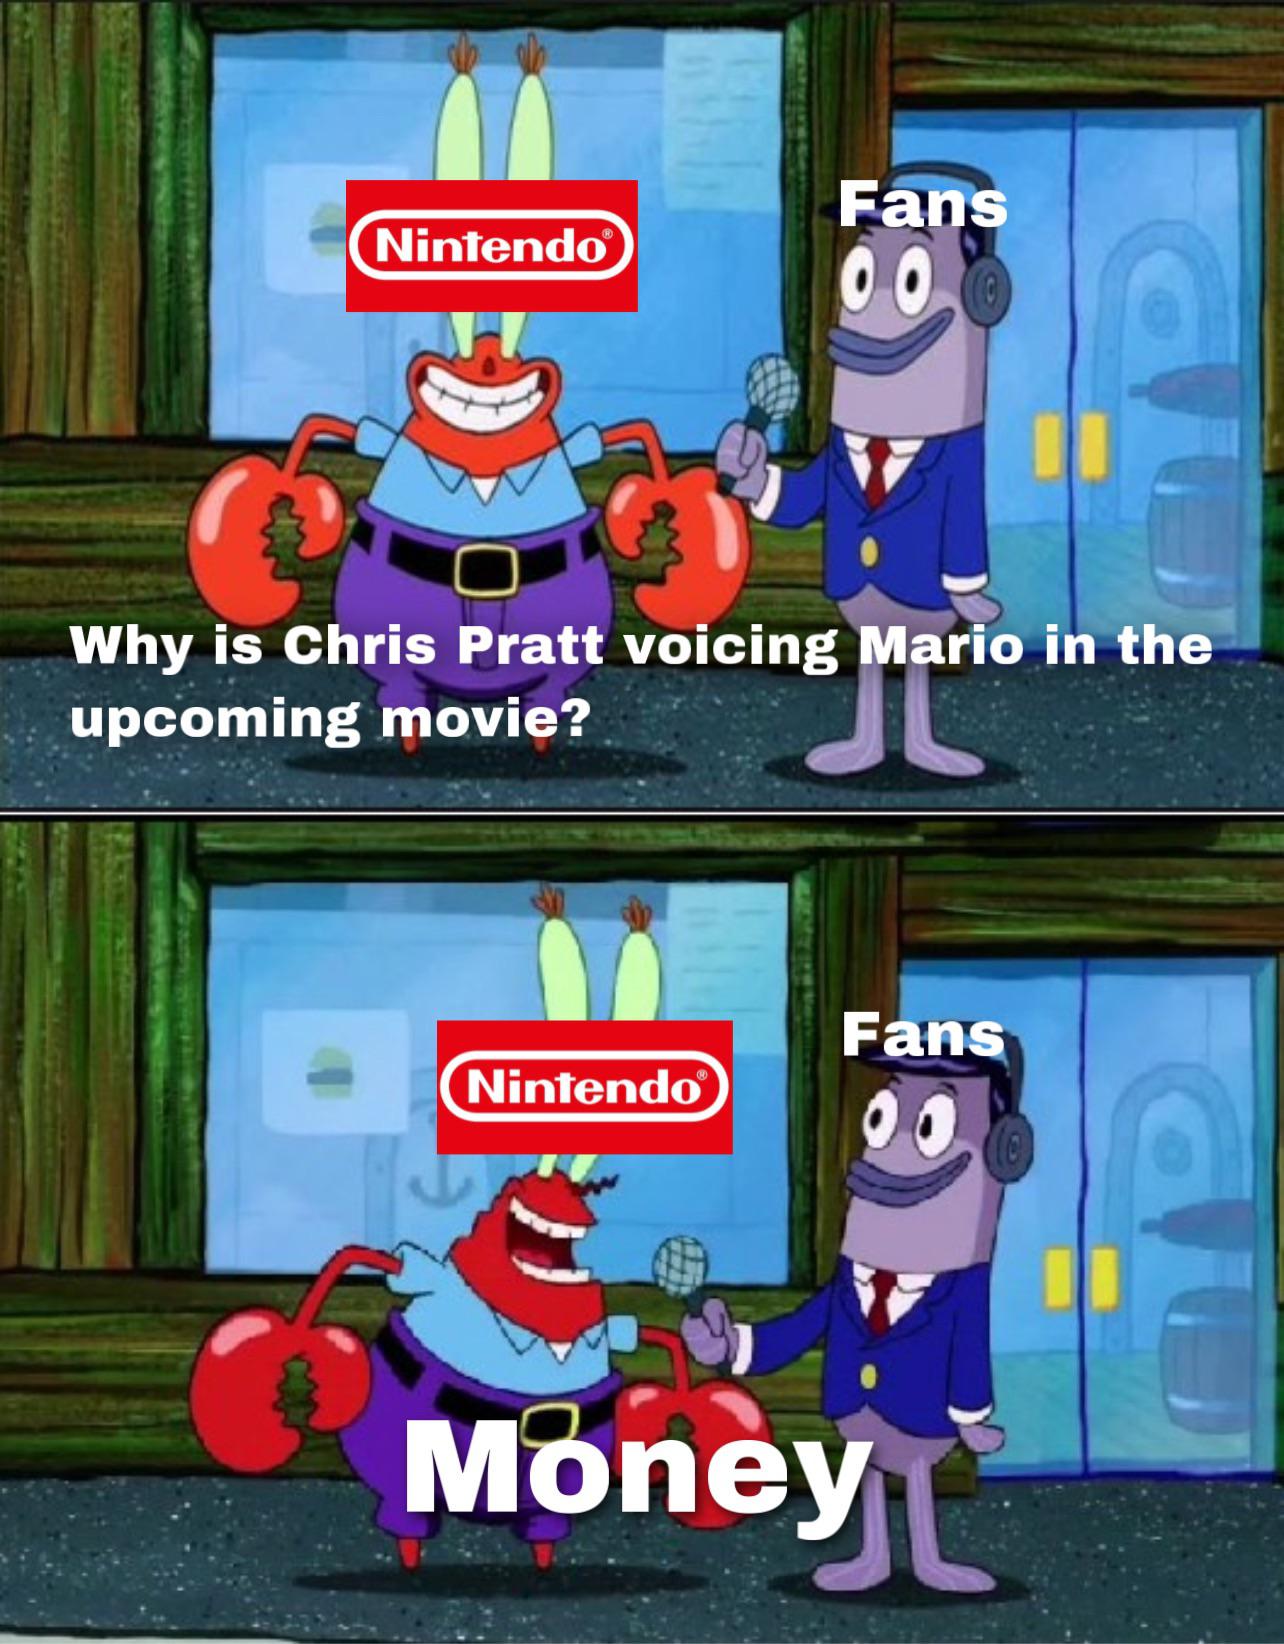 dank memes - like money meme - Nintendo Fans 0.0 Why is Chris Pratt voicing Mario in the upcoming movie? C Fans Nintendo Money